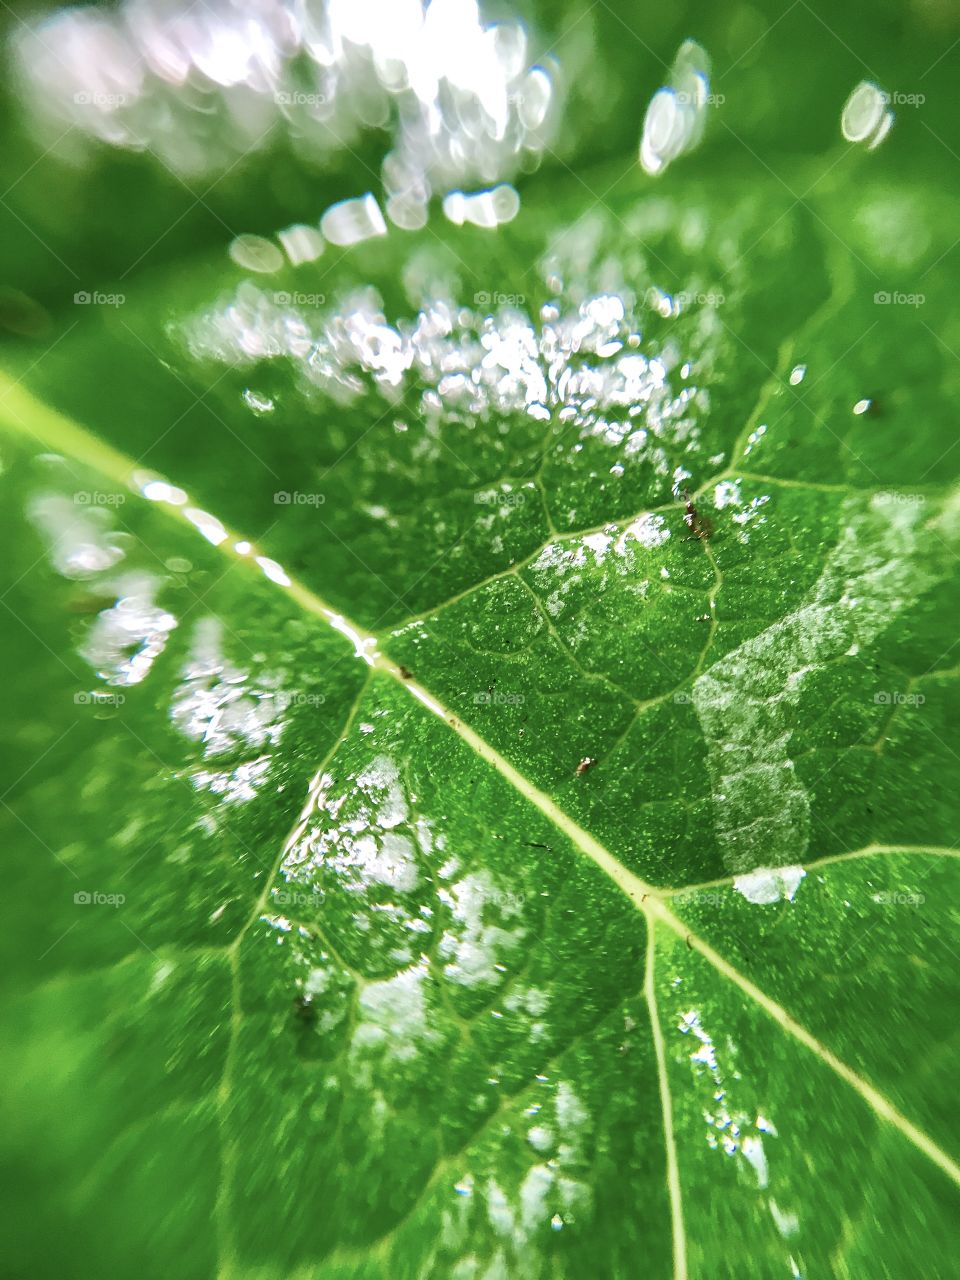 Green leaf Texture